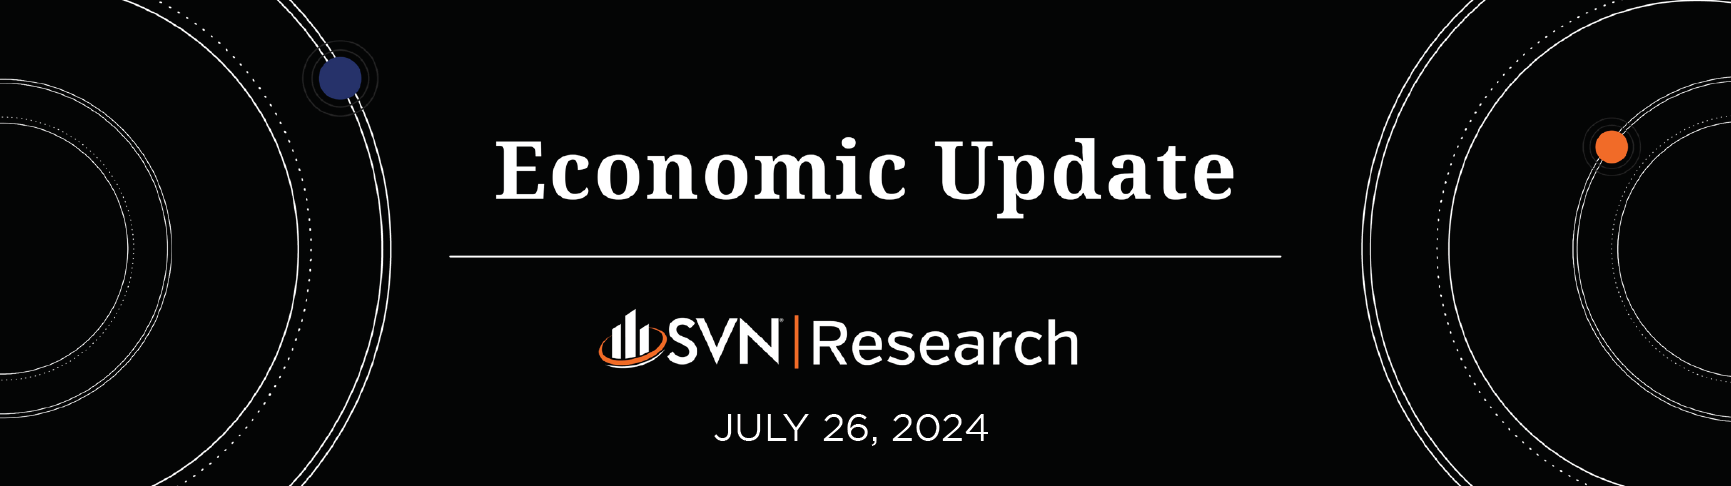 SVN | Research Economic Update 7.26.2024